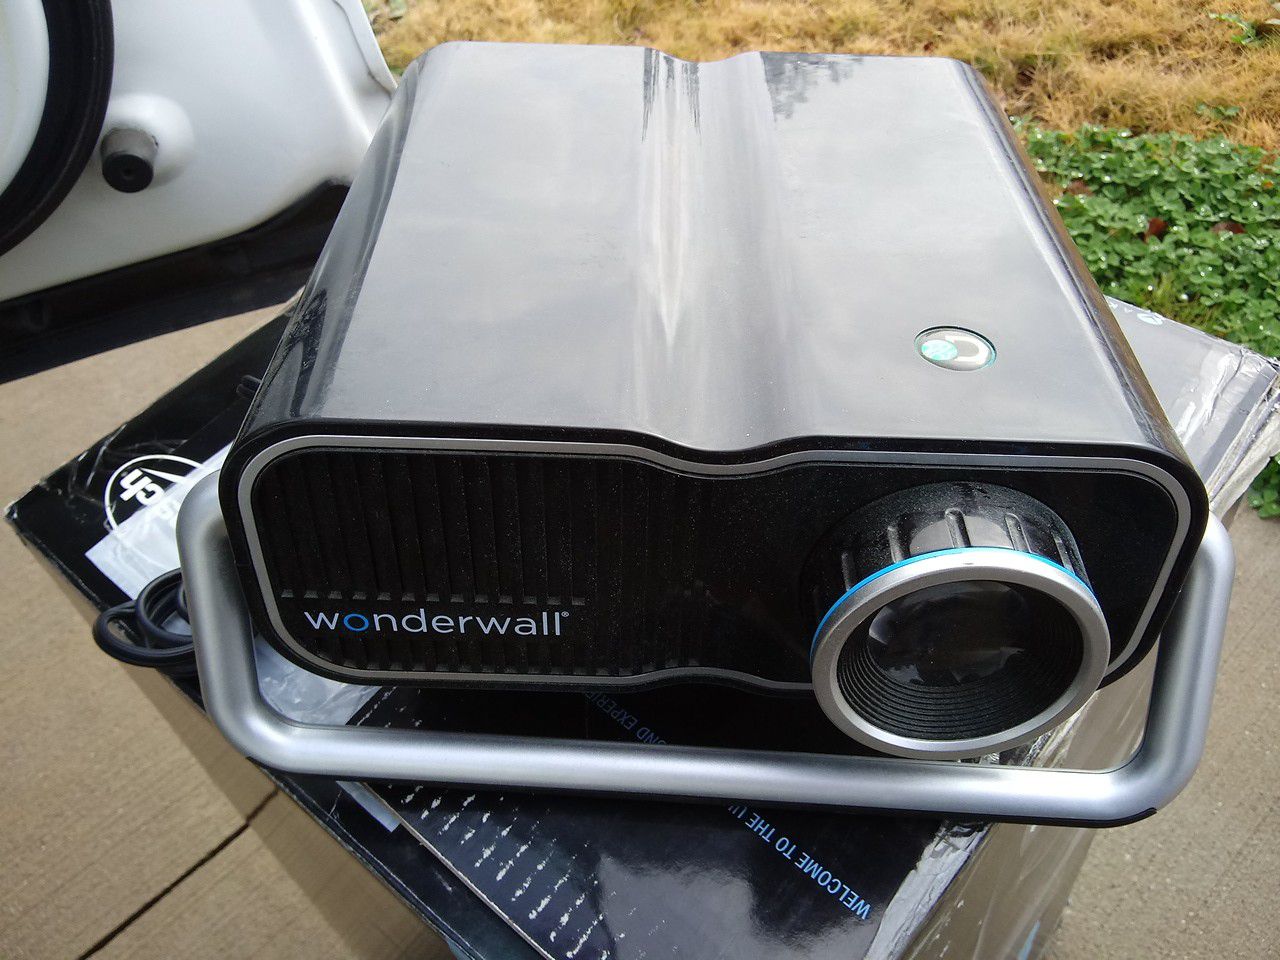 Wonderwall projecter